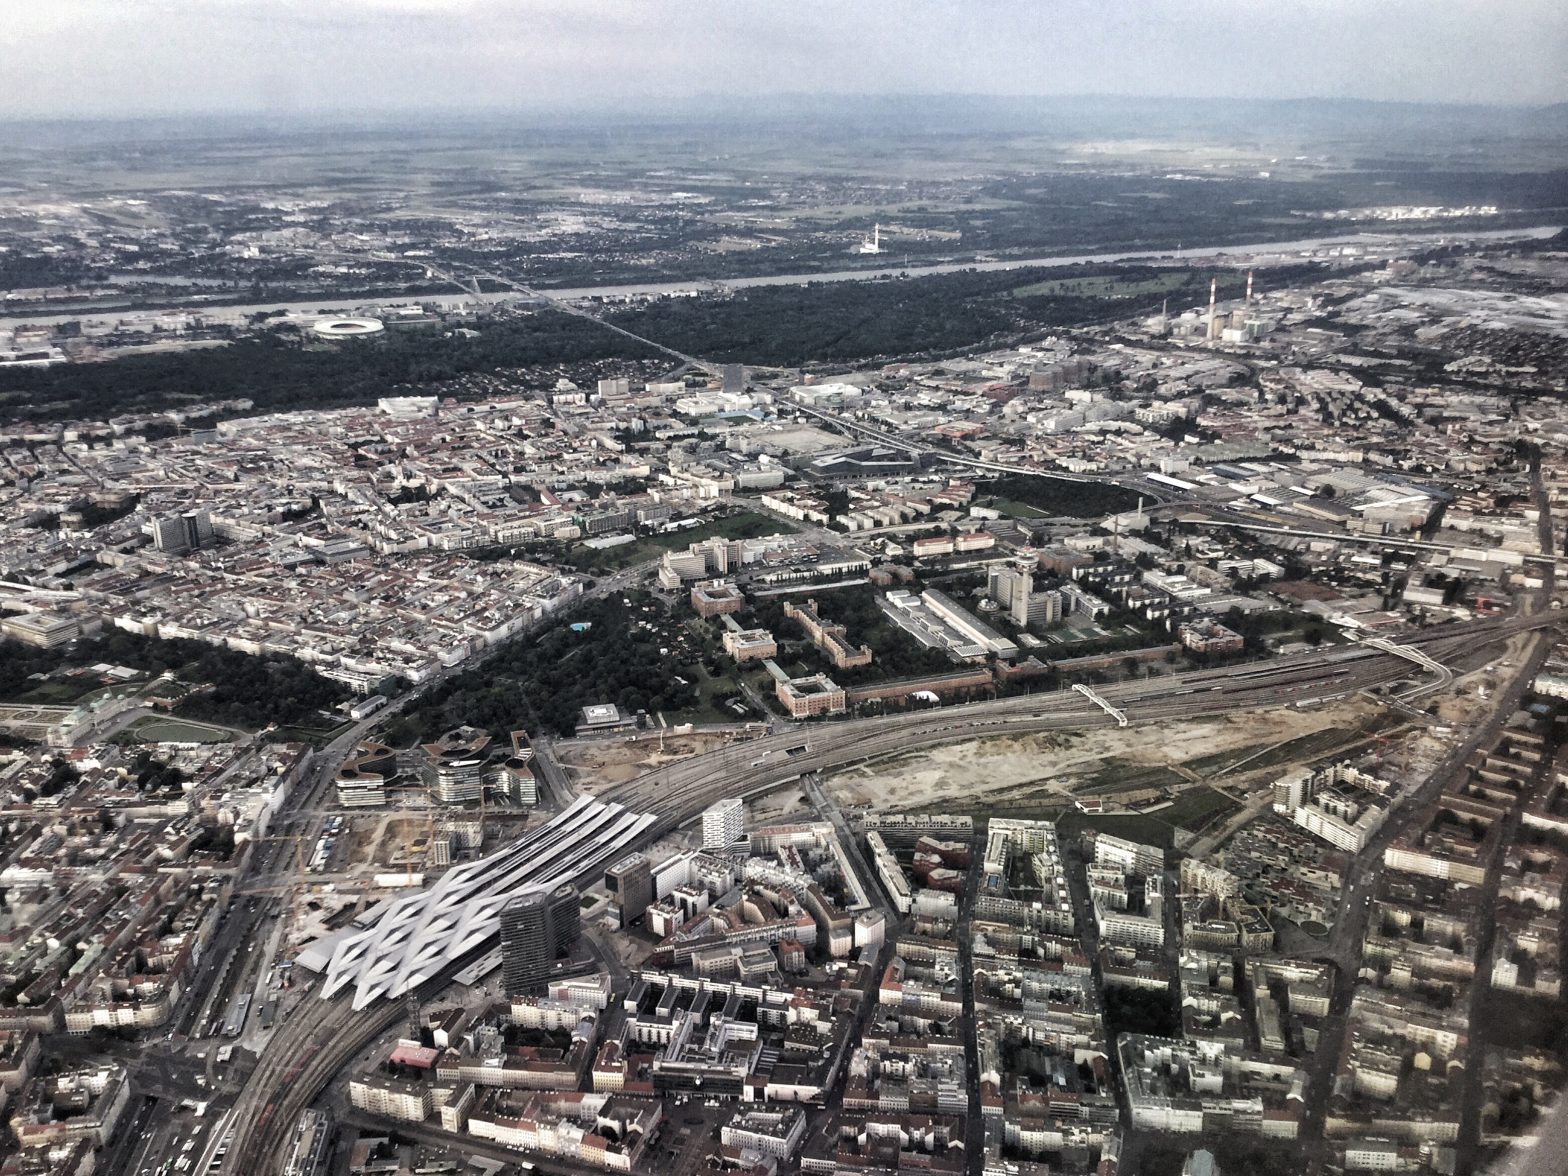 Wien from above